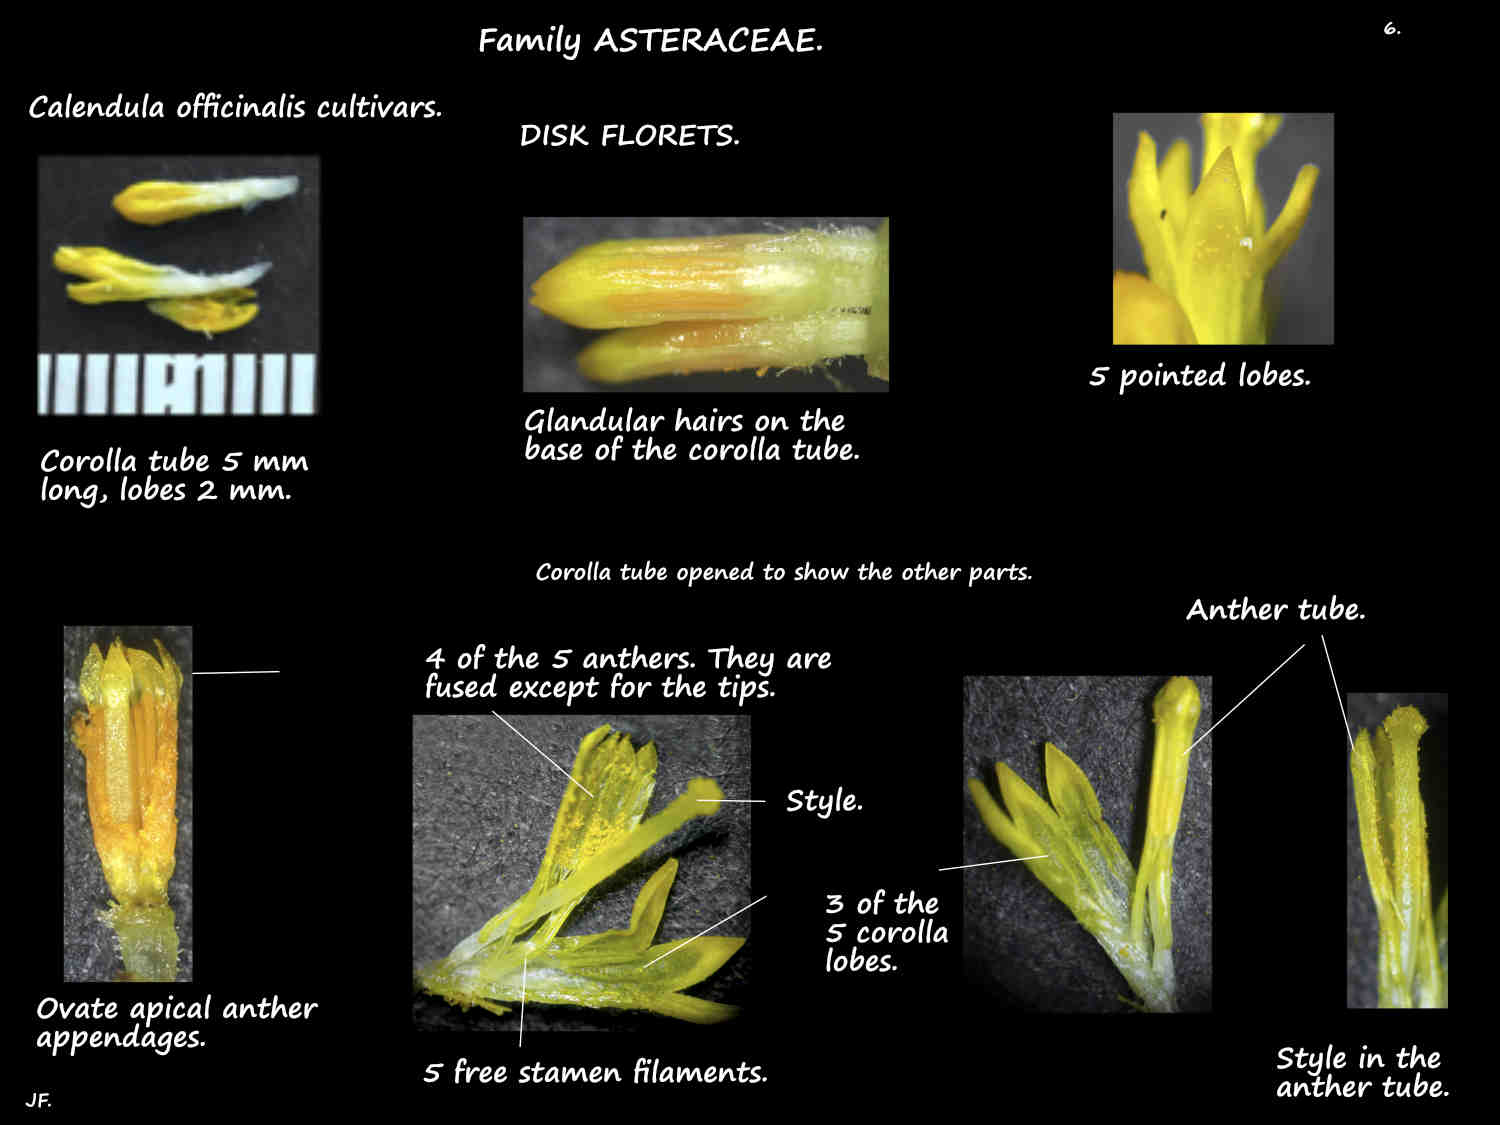 6 Disk florets of Calendula officinalis cultivars